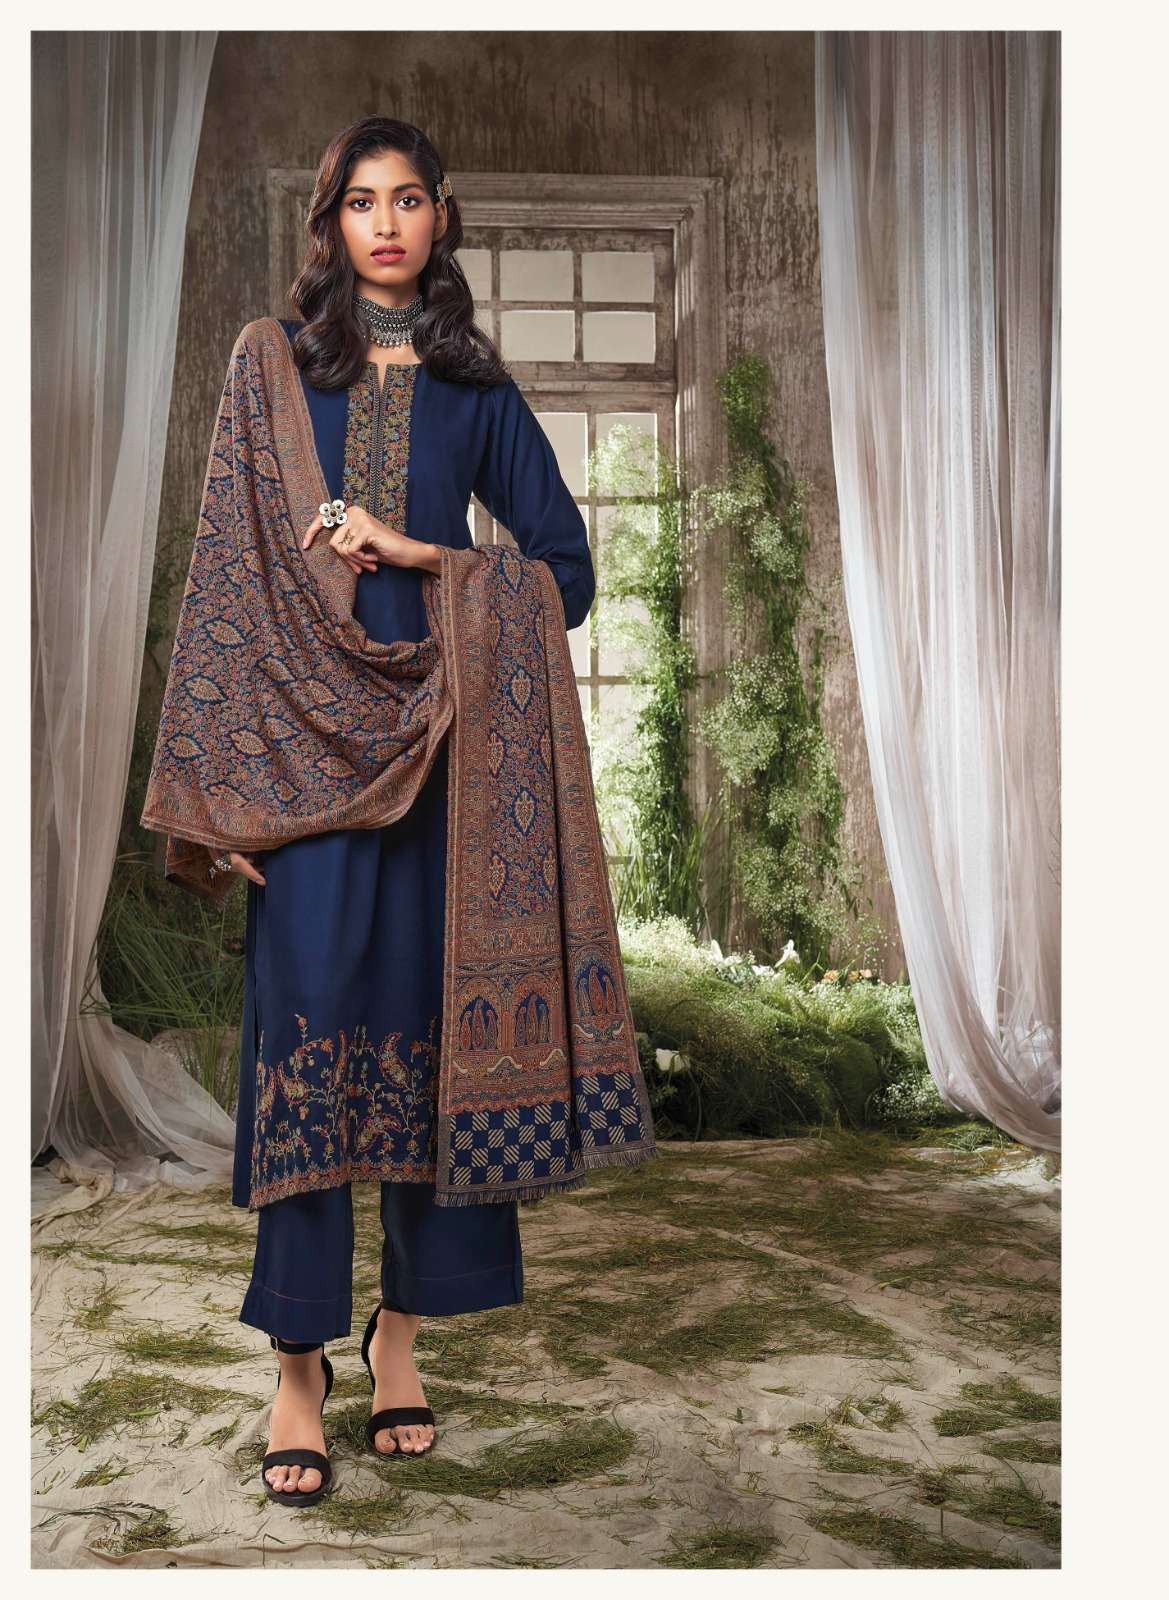 ganga amaranta 1665-1670 series latest designer pakistani salwar kameez wholesaler surat gujarat